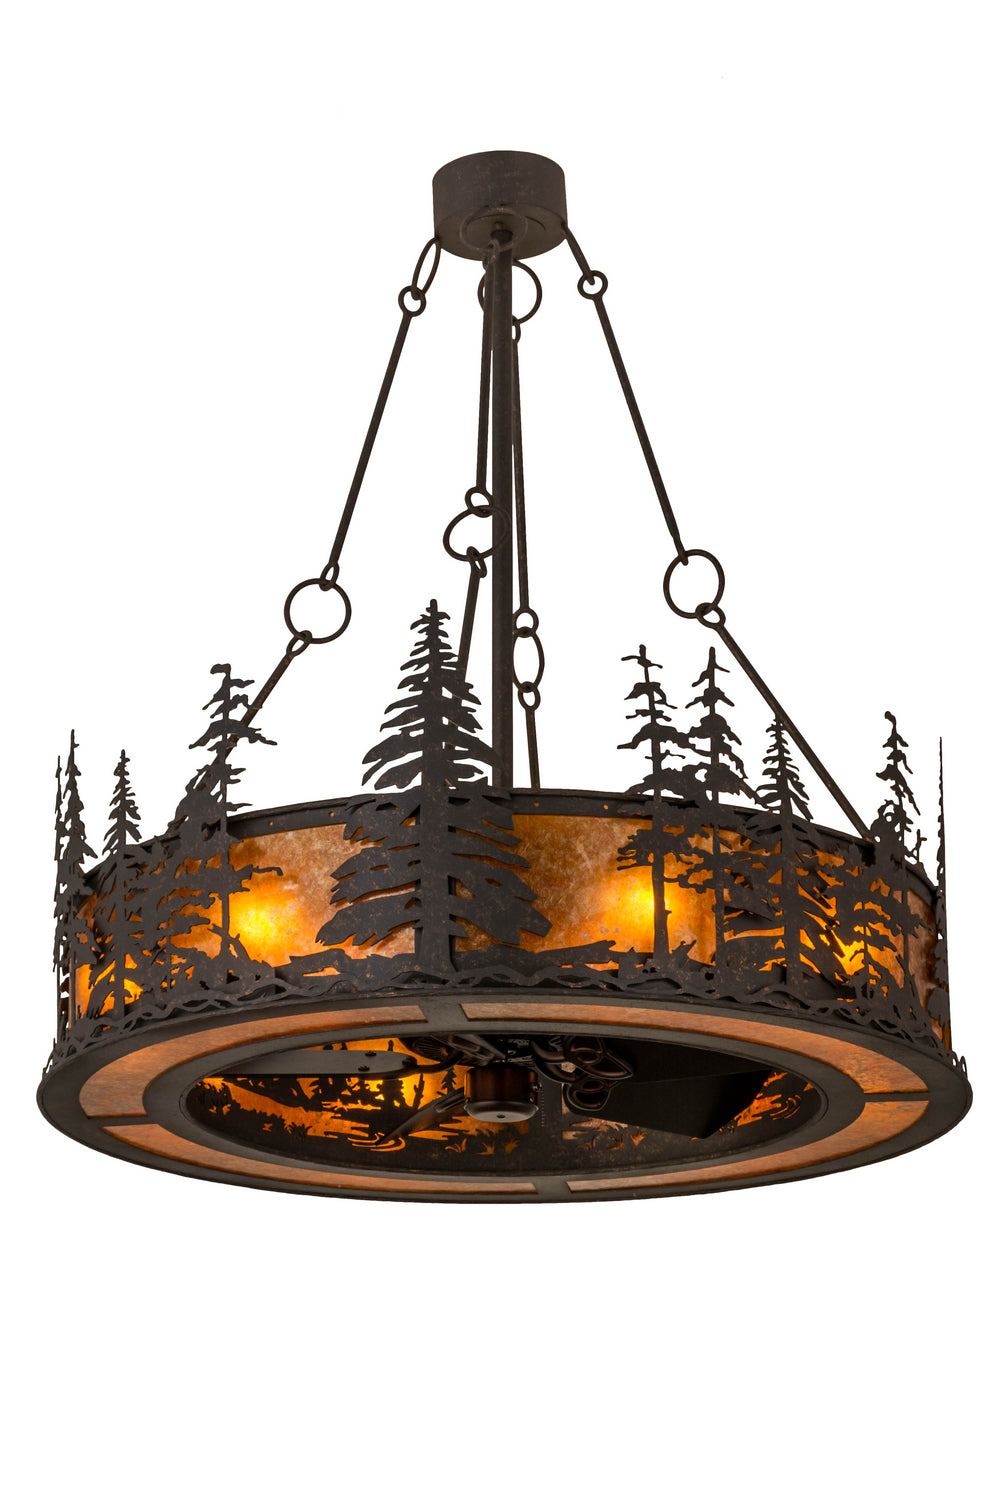 Meyda Tiffany Tall Pines 166833 Ceiling Fan - Copper Rust /Amber Mica